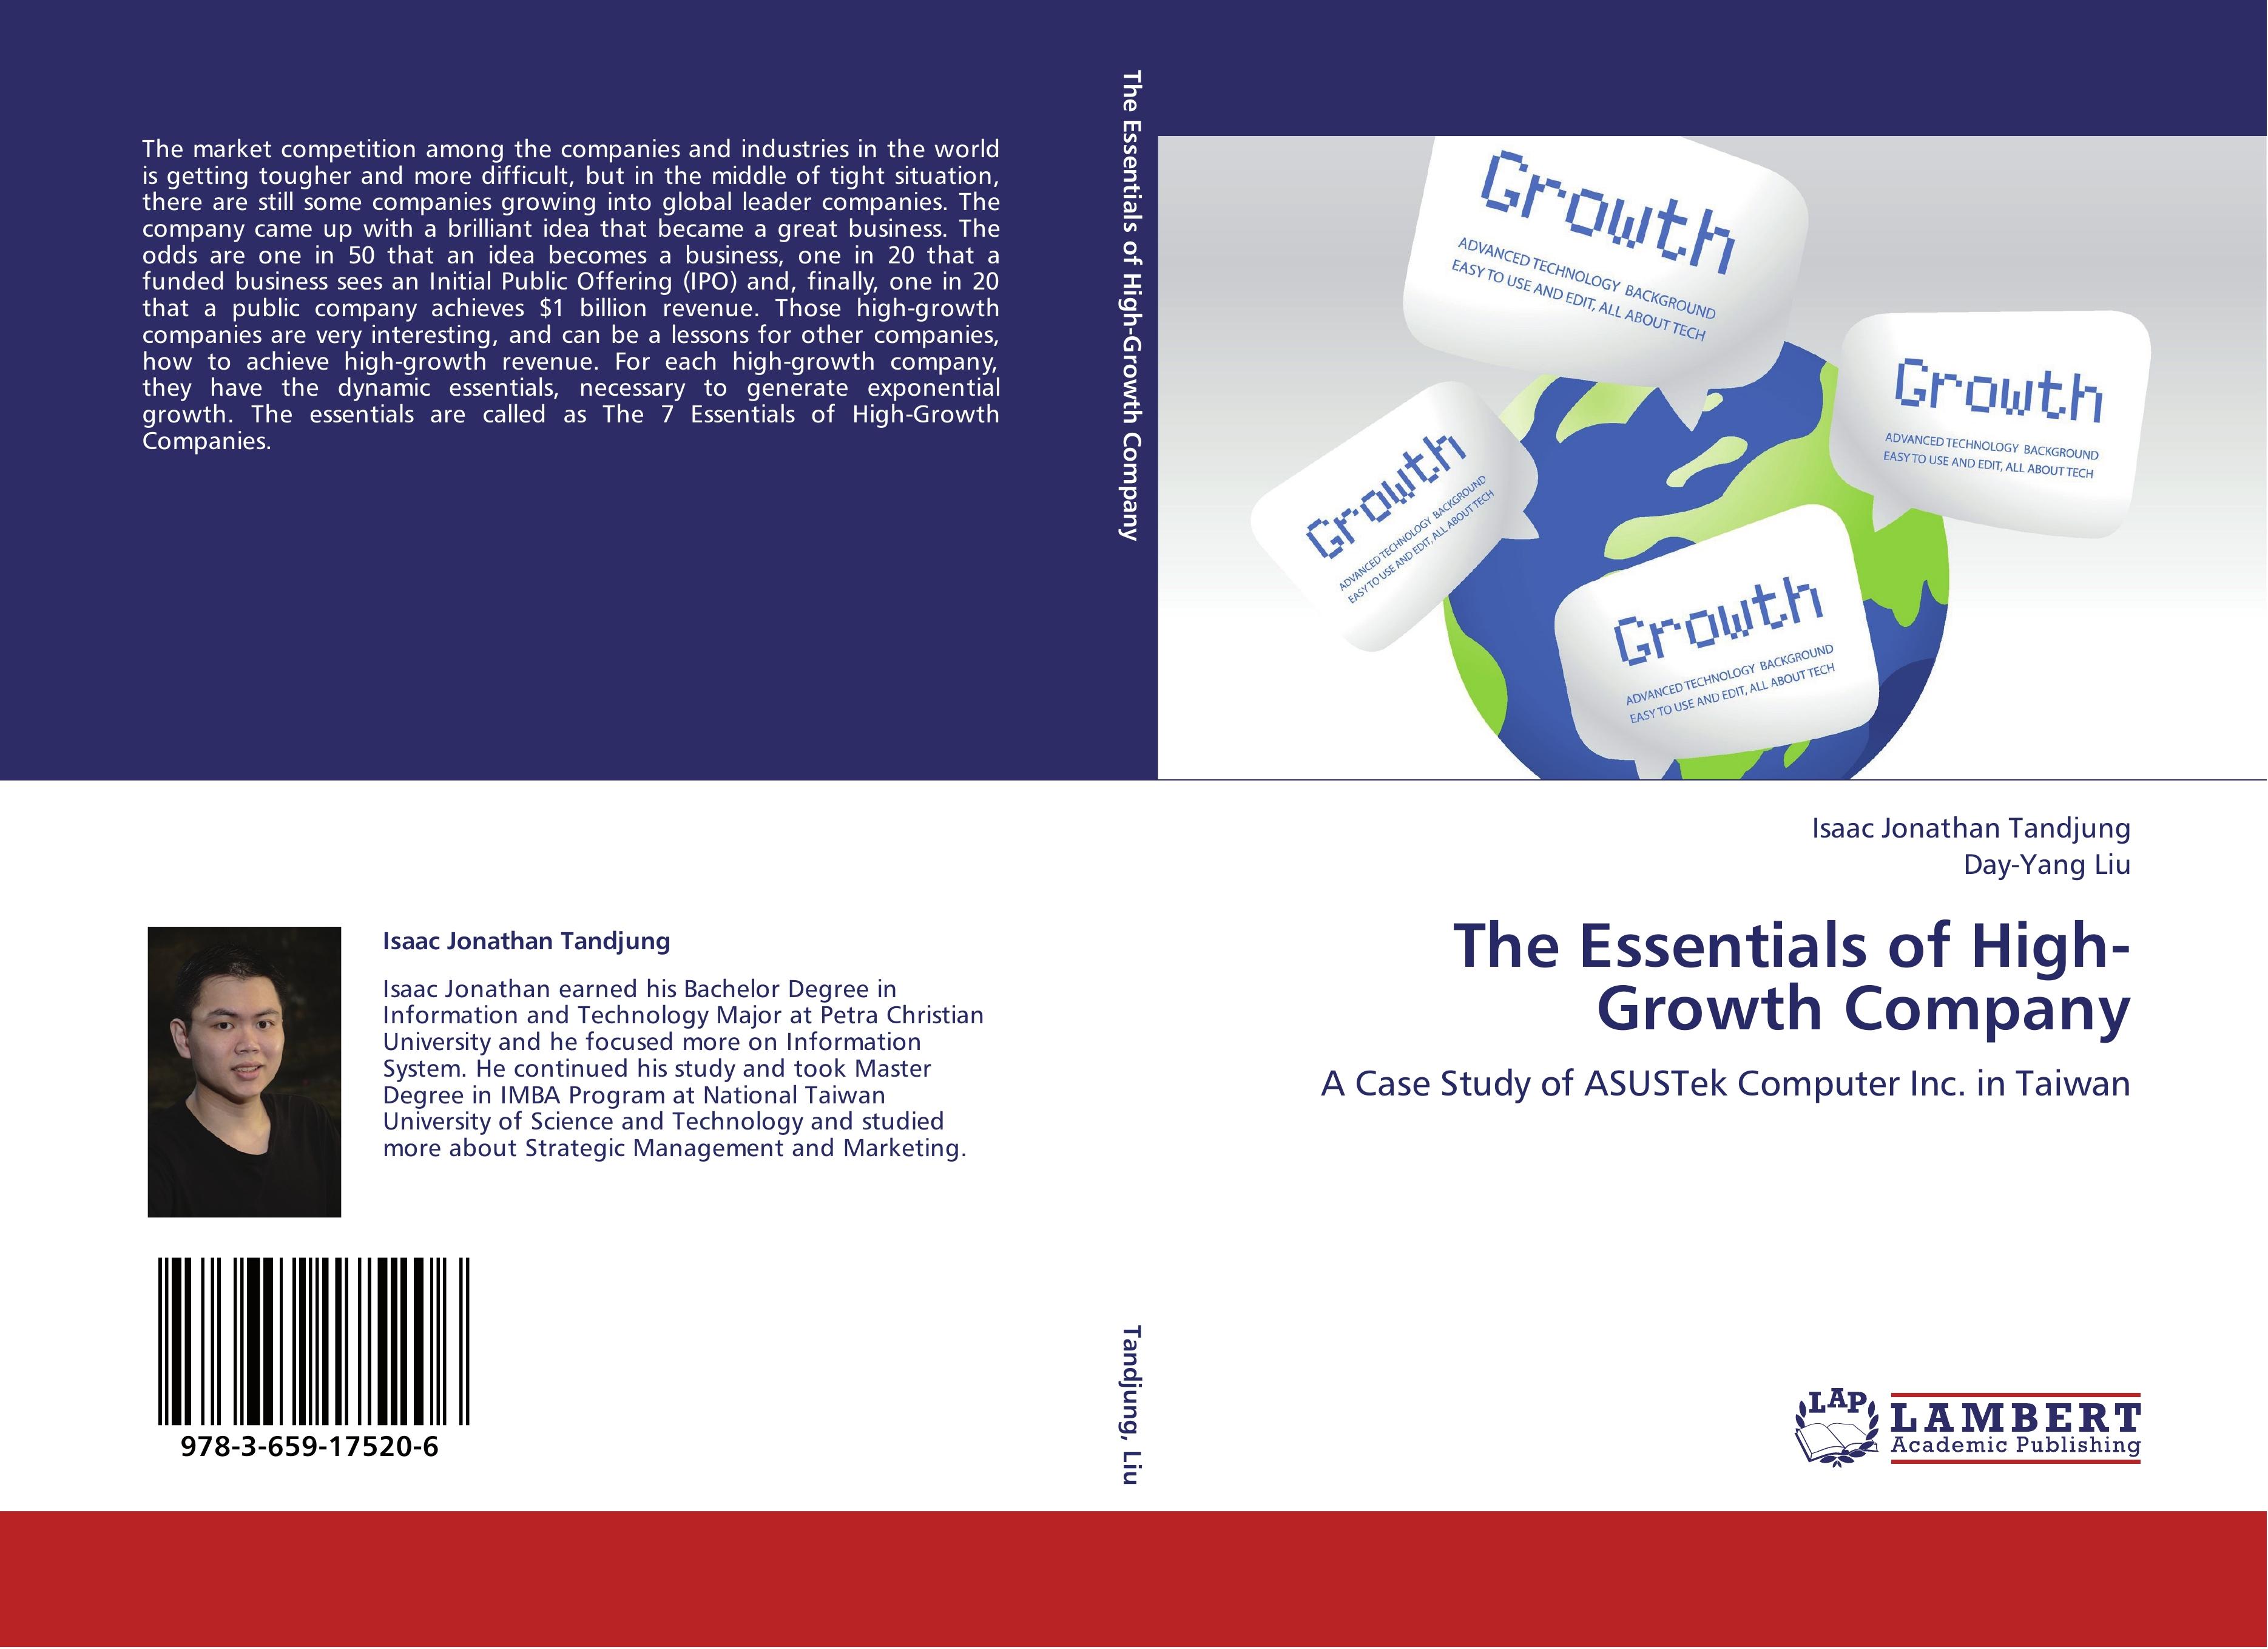 The Essentials of High-Growth Company - Isaac Jonathan Tandjung Day-Yang Liu